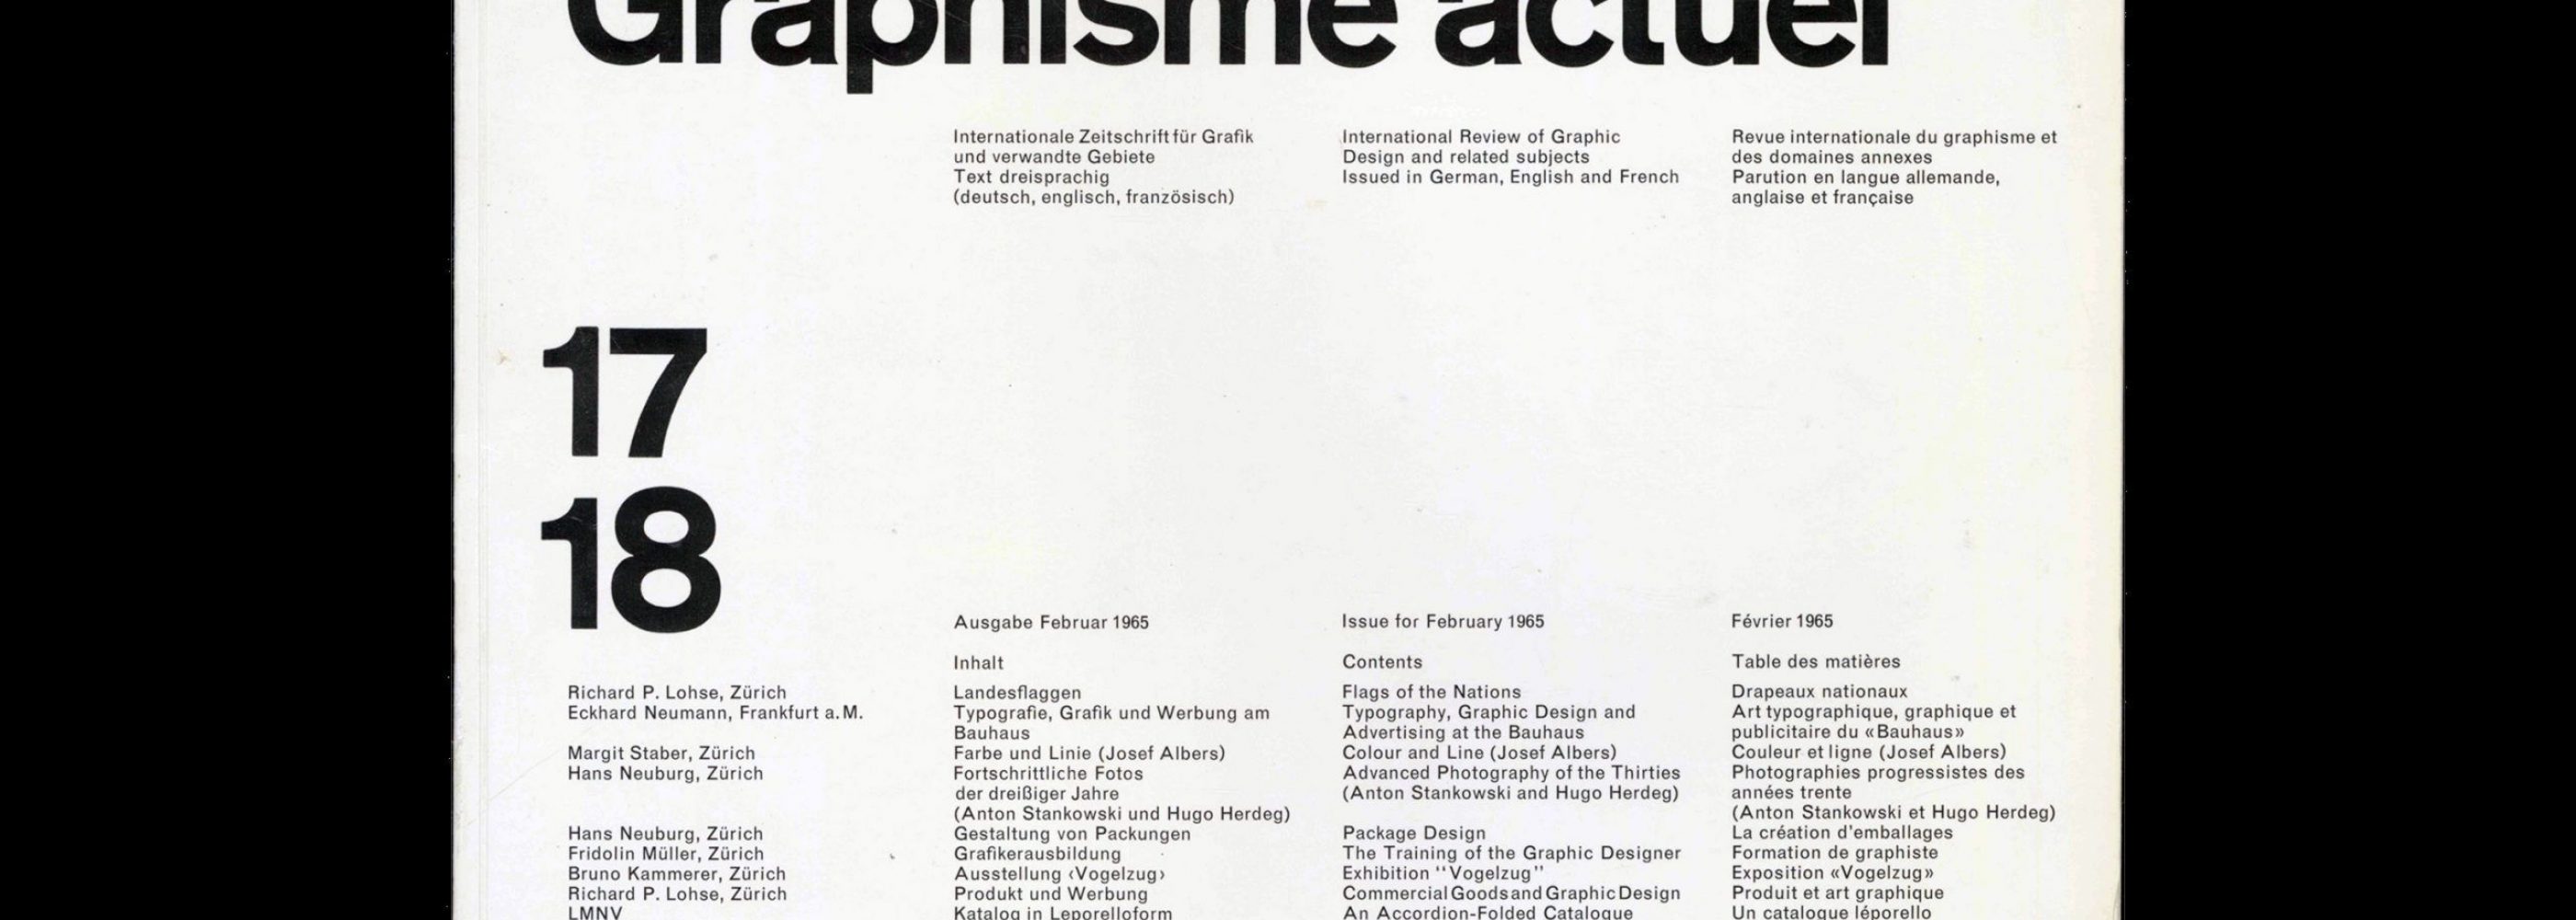 Neue Grafik / New Graphic Design / Graphisme actuel - No.17/18, 1965. Josef Müller-Brockmann, Hans Neuburg, Richard Paul Lohse, and Carlo Vivarelli